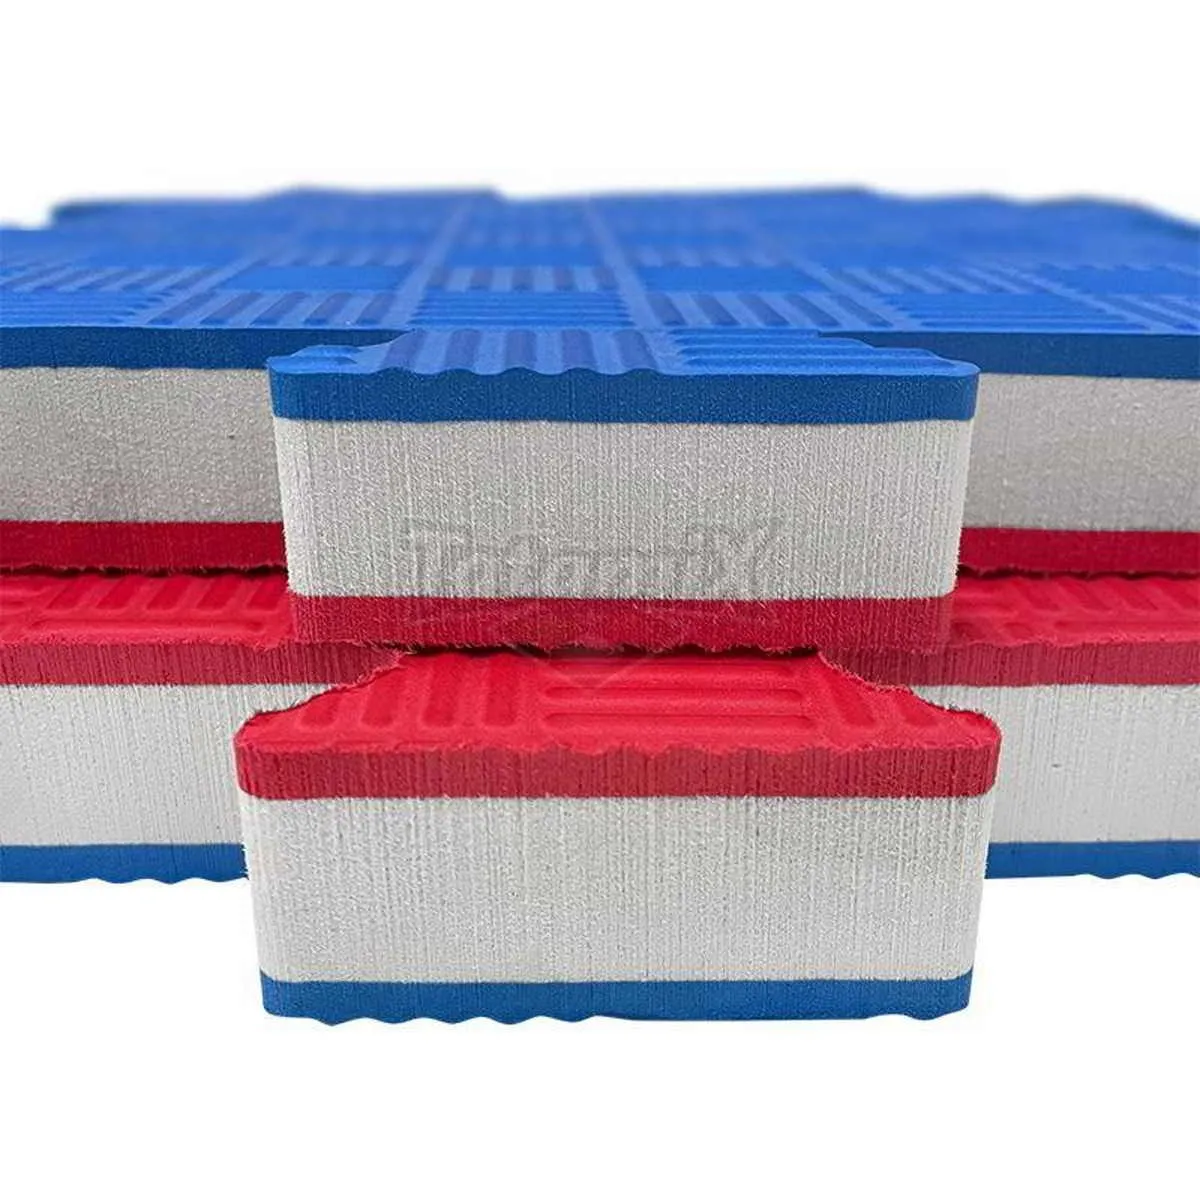 Taekwondo martial arts mats red/blue, WT approved